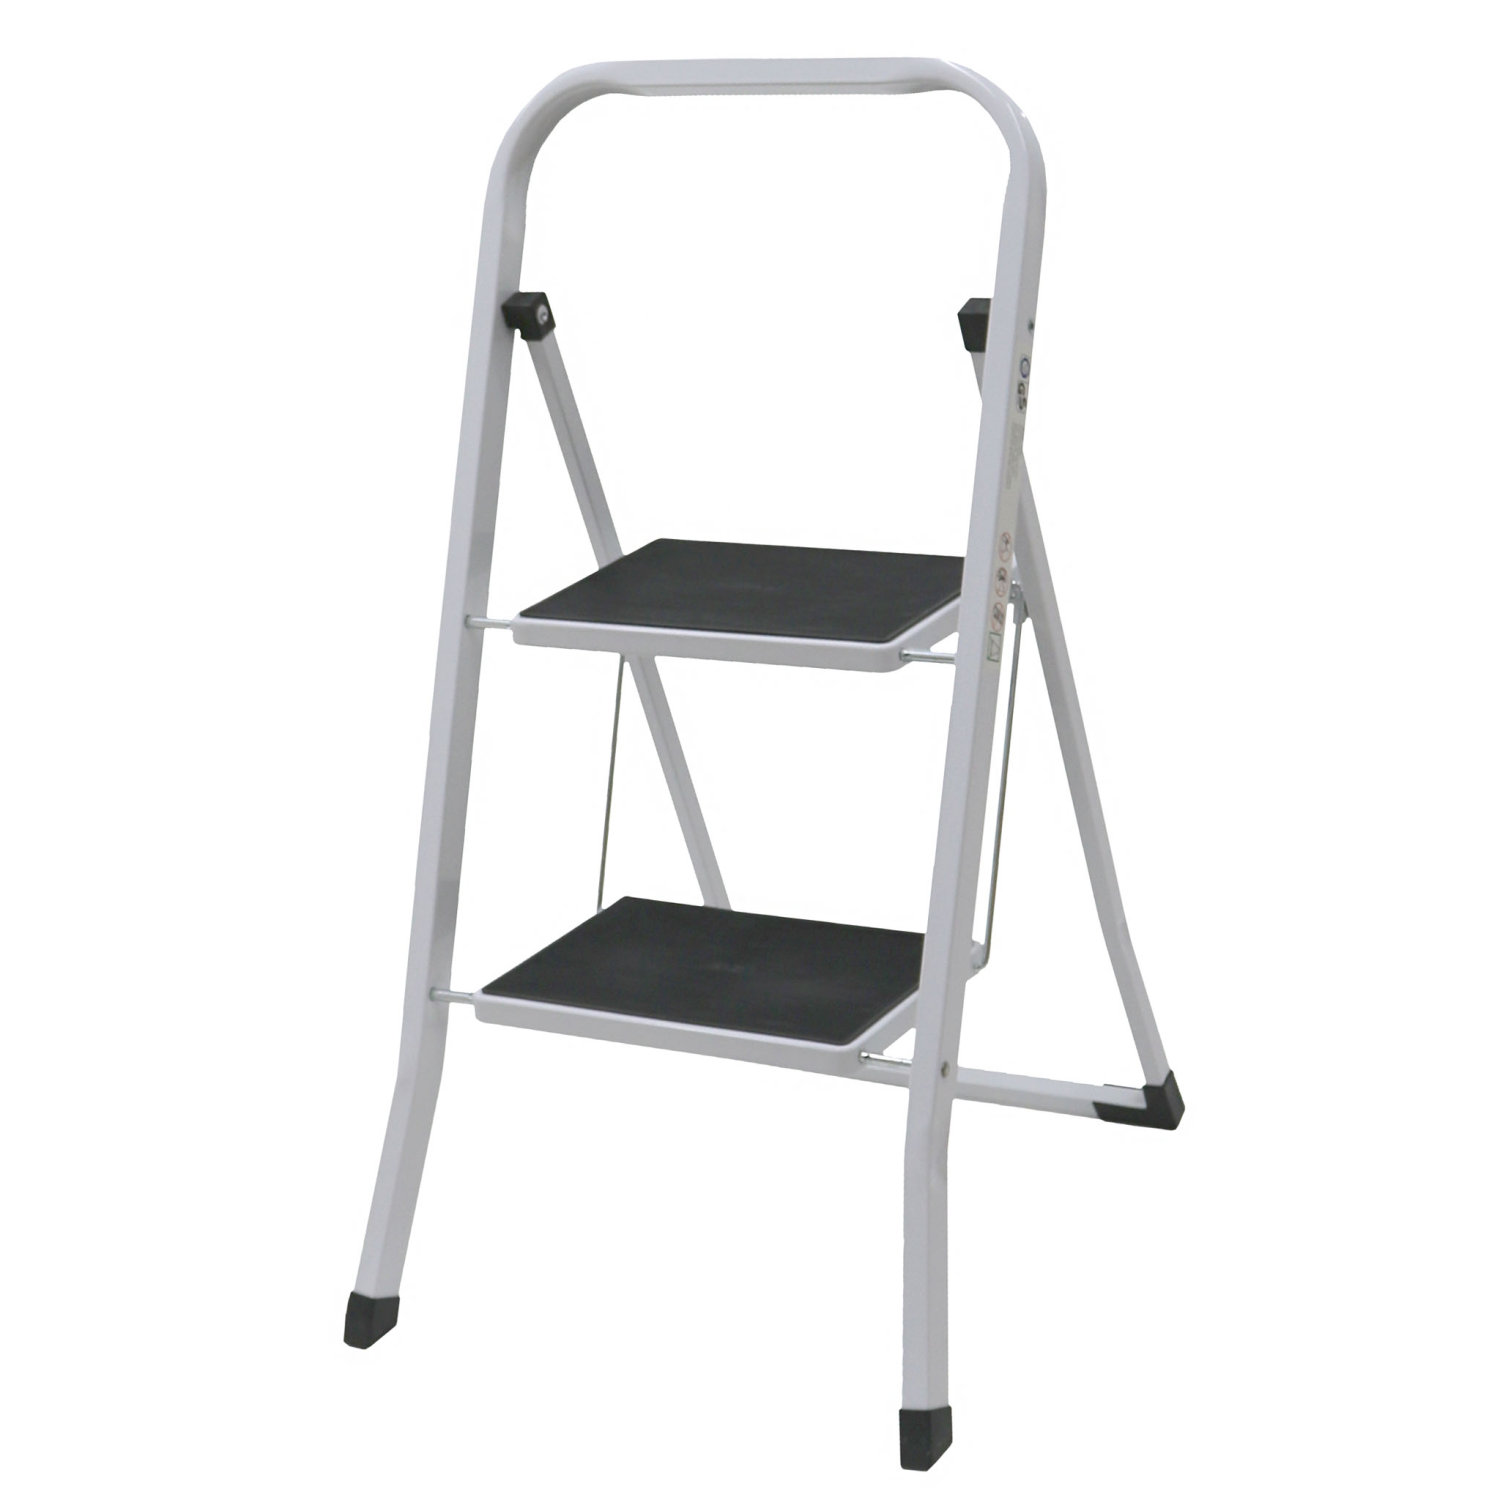 2 Step Foldable Ladder Safety Anti Slip Mat Tread Kitchen Stool DIY UK Seller 